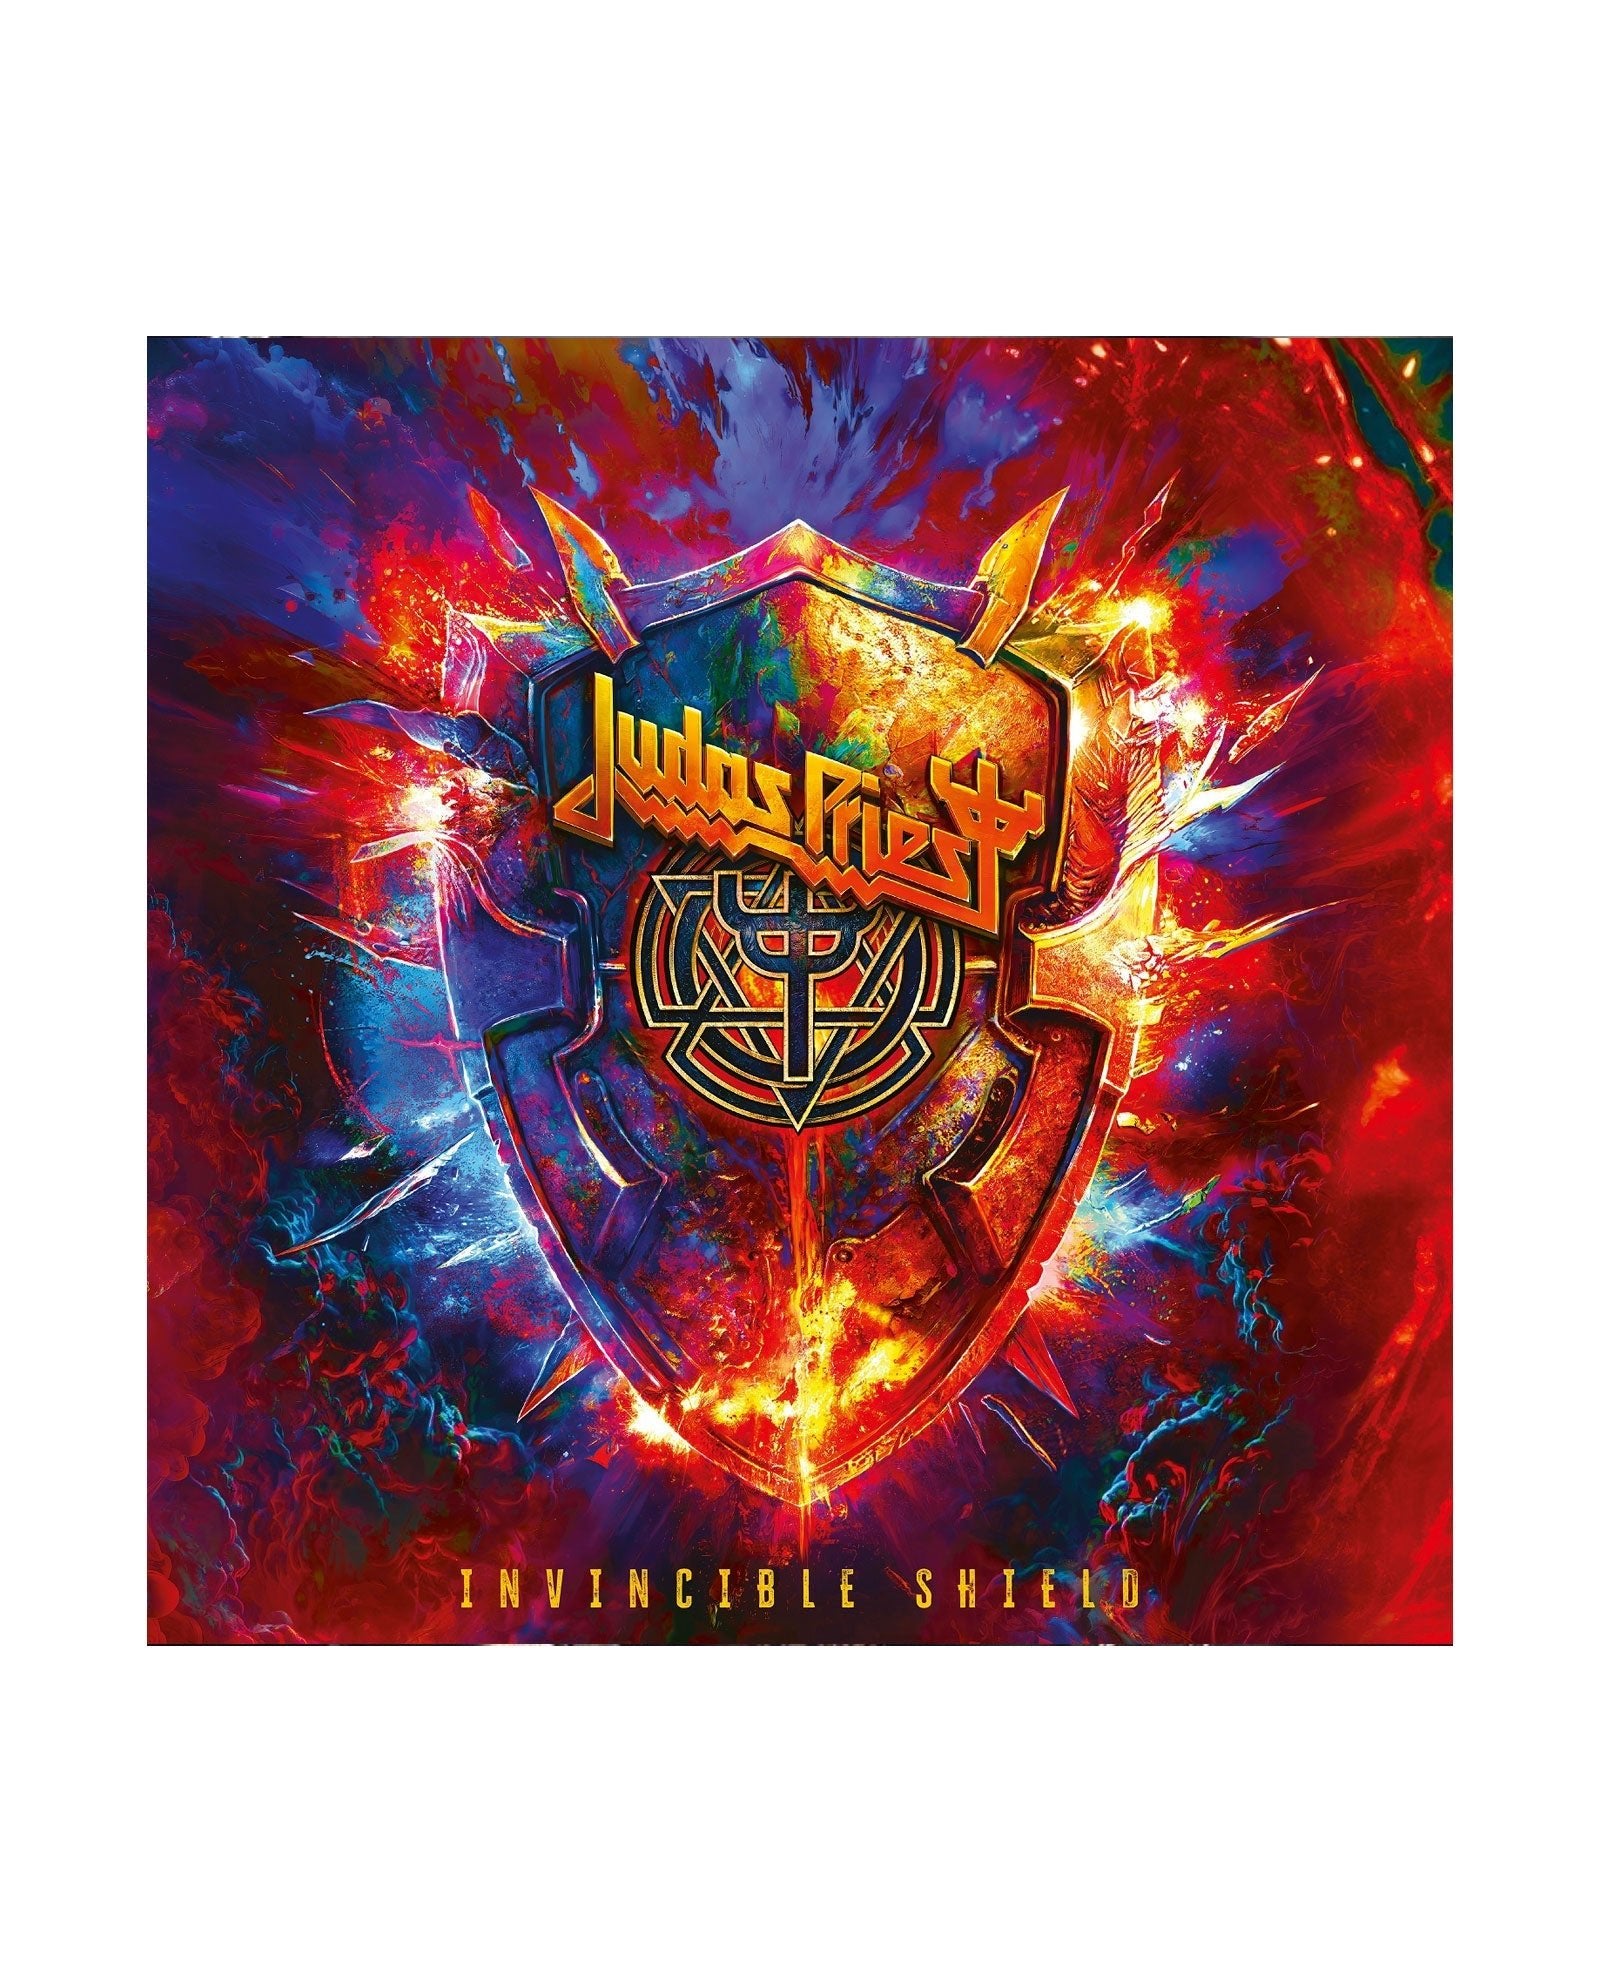 Judas Priest - CD Deluxe "Invincible Shield" - D2fy · Rocktud - Rocktud